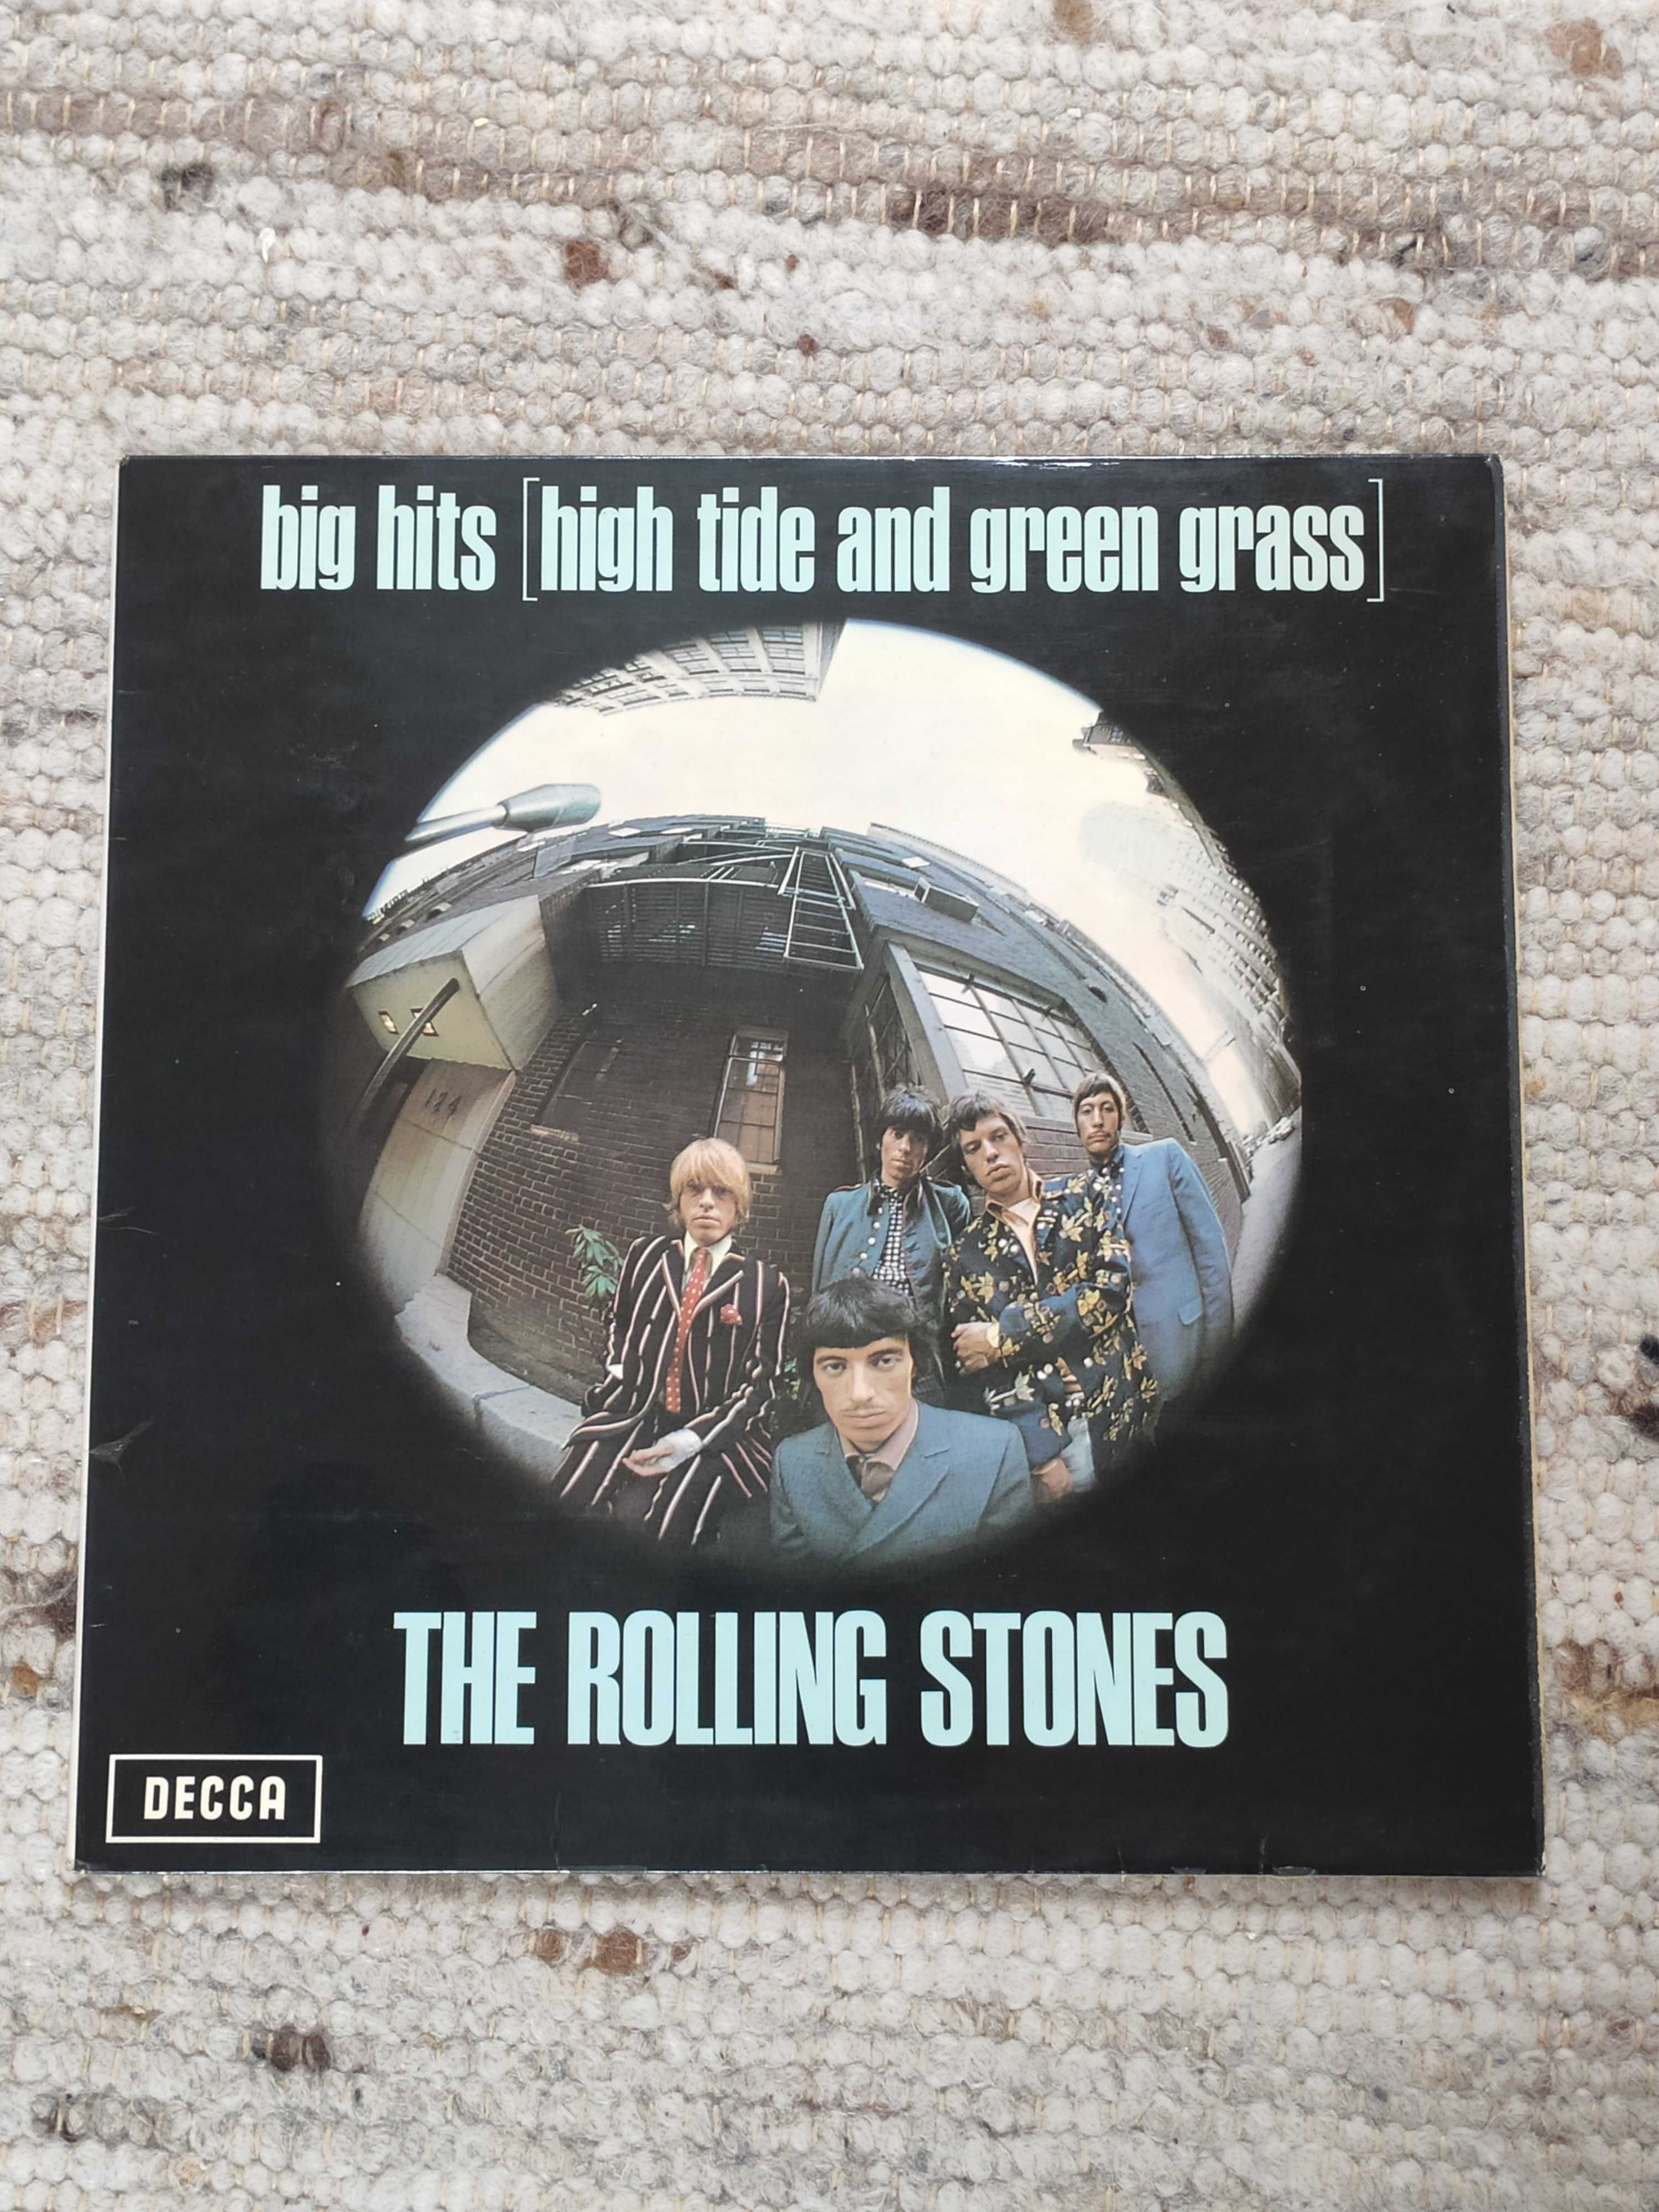 EX, KOMPLETNE wyd. ang. The Rolling Stones LP Big Hits, winyl